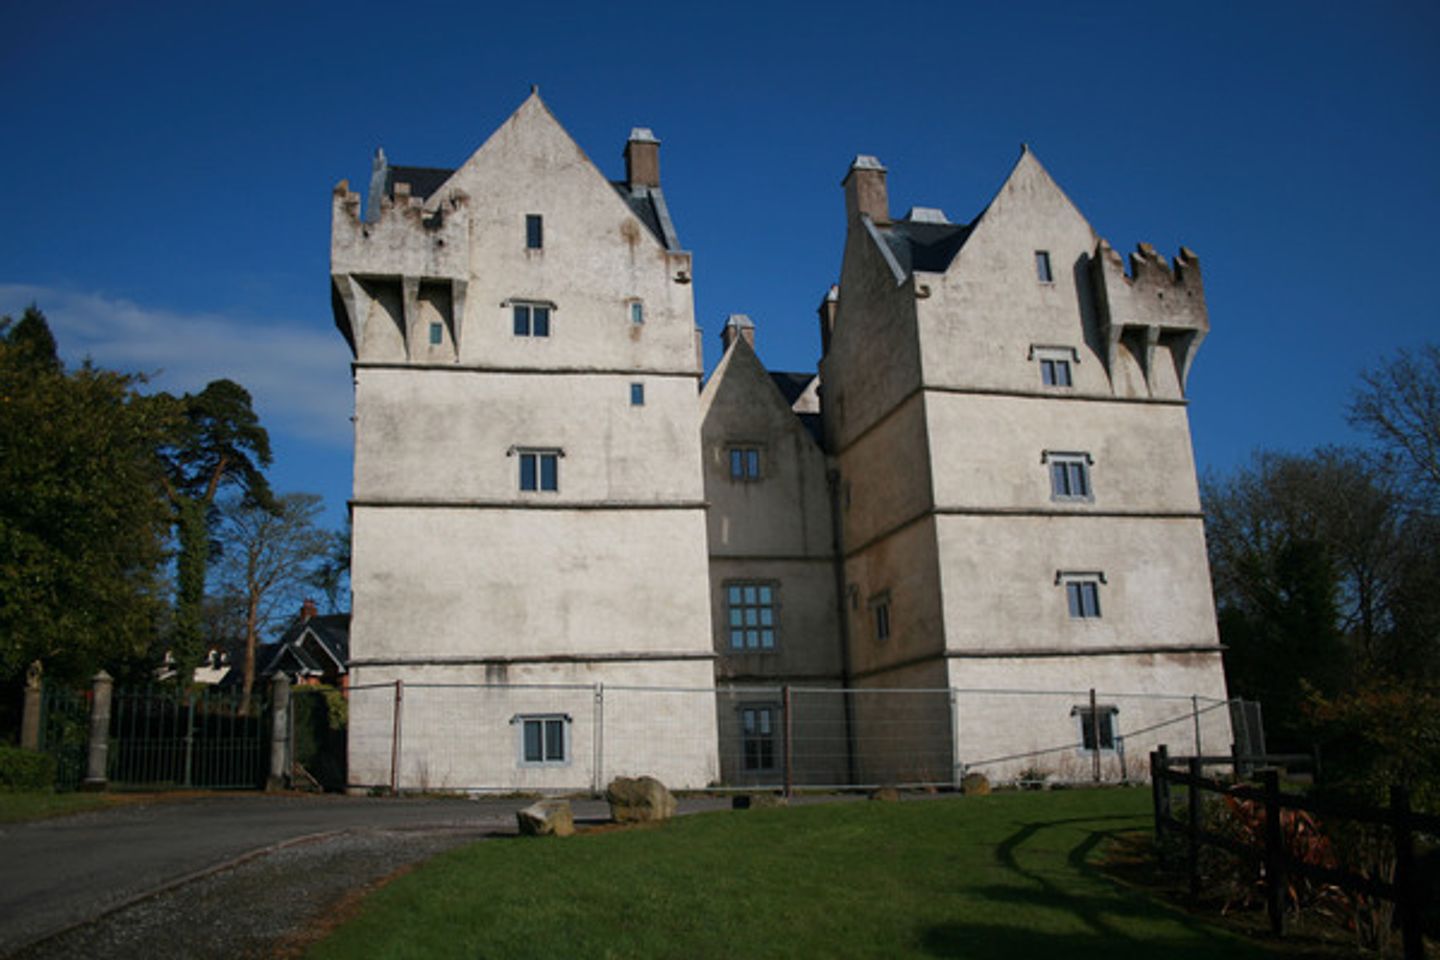 Monkstown Castle, The Demesne, Monkstown, Co. Cork